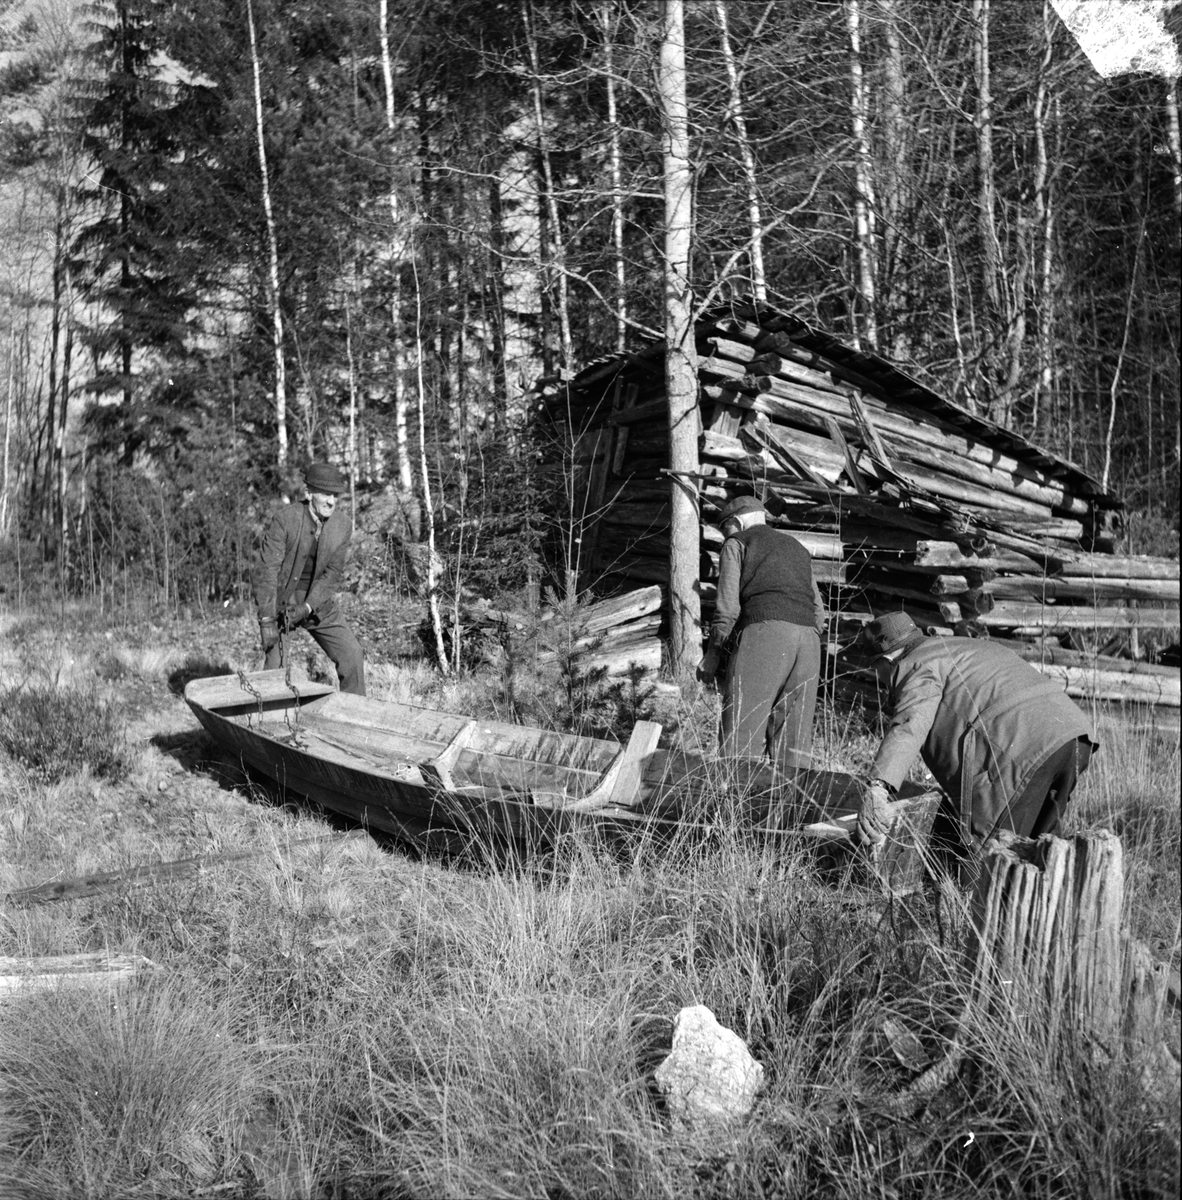 Gällsjöstuga,
Iggström Oskar, Persson, Orreland,
Sept 1973